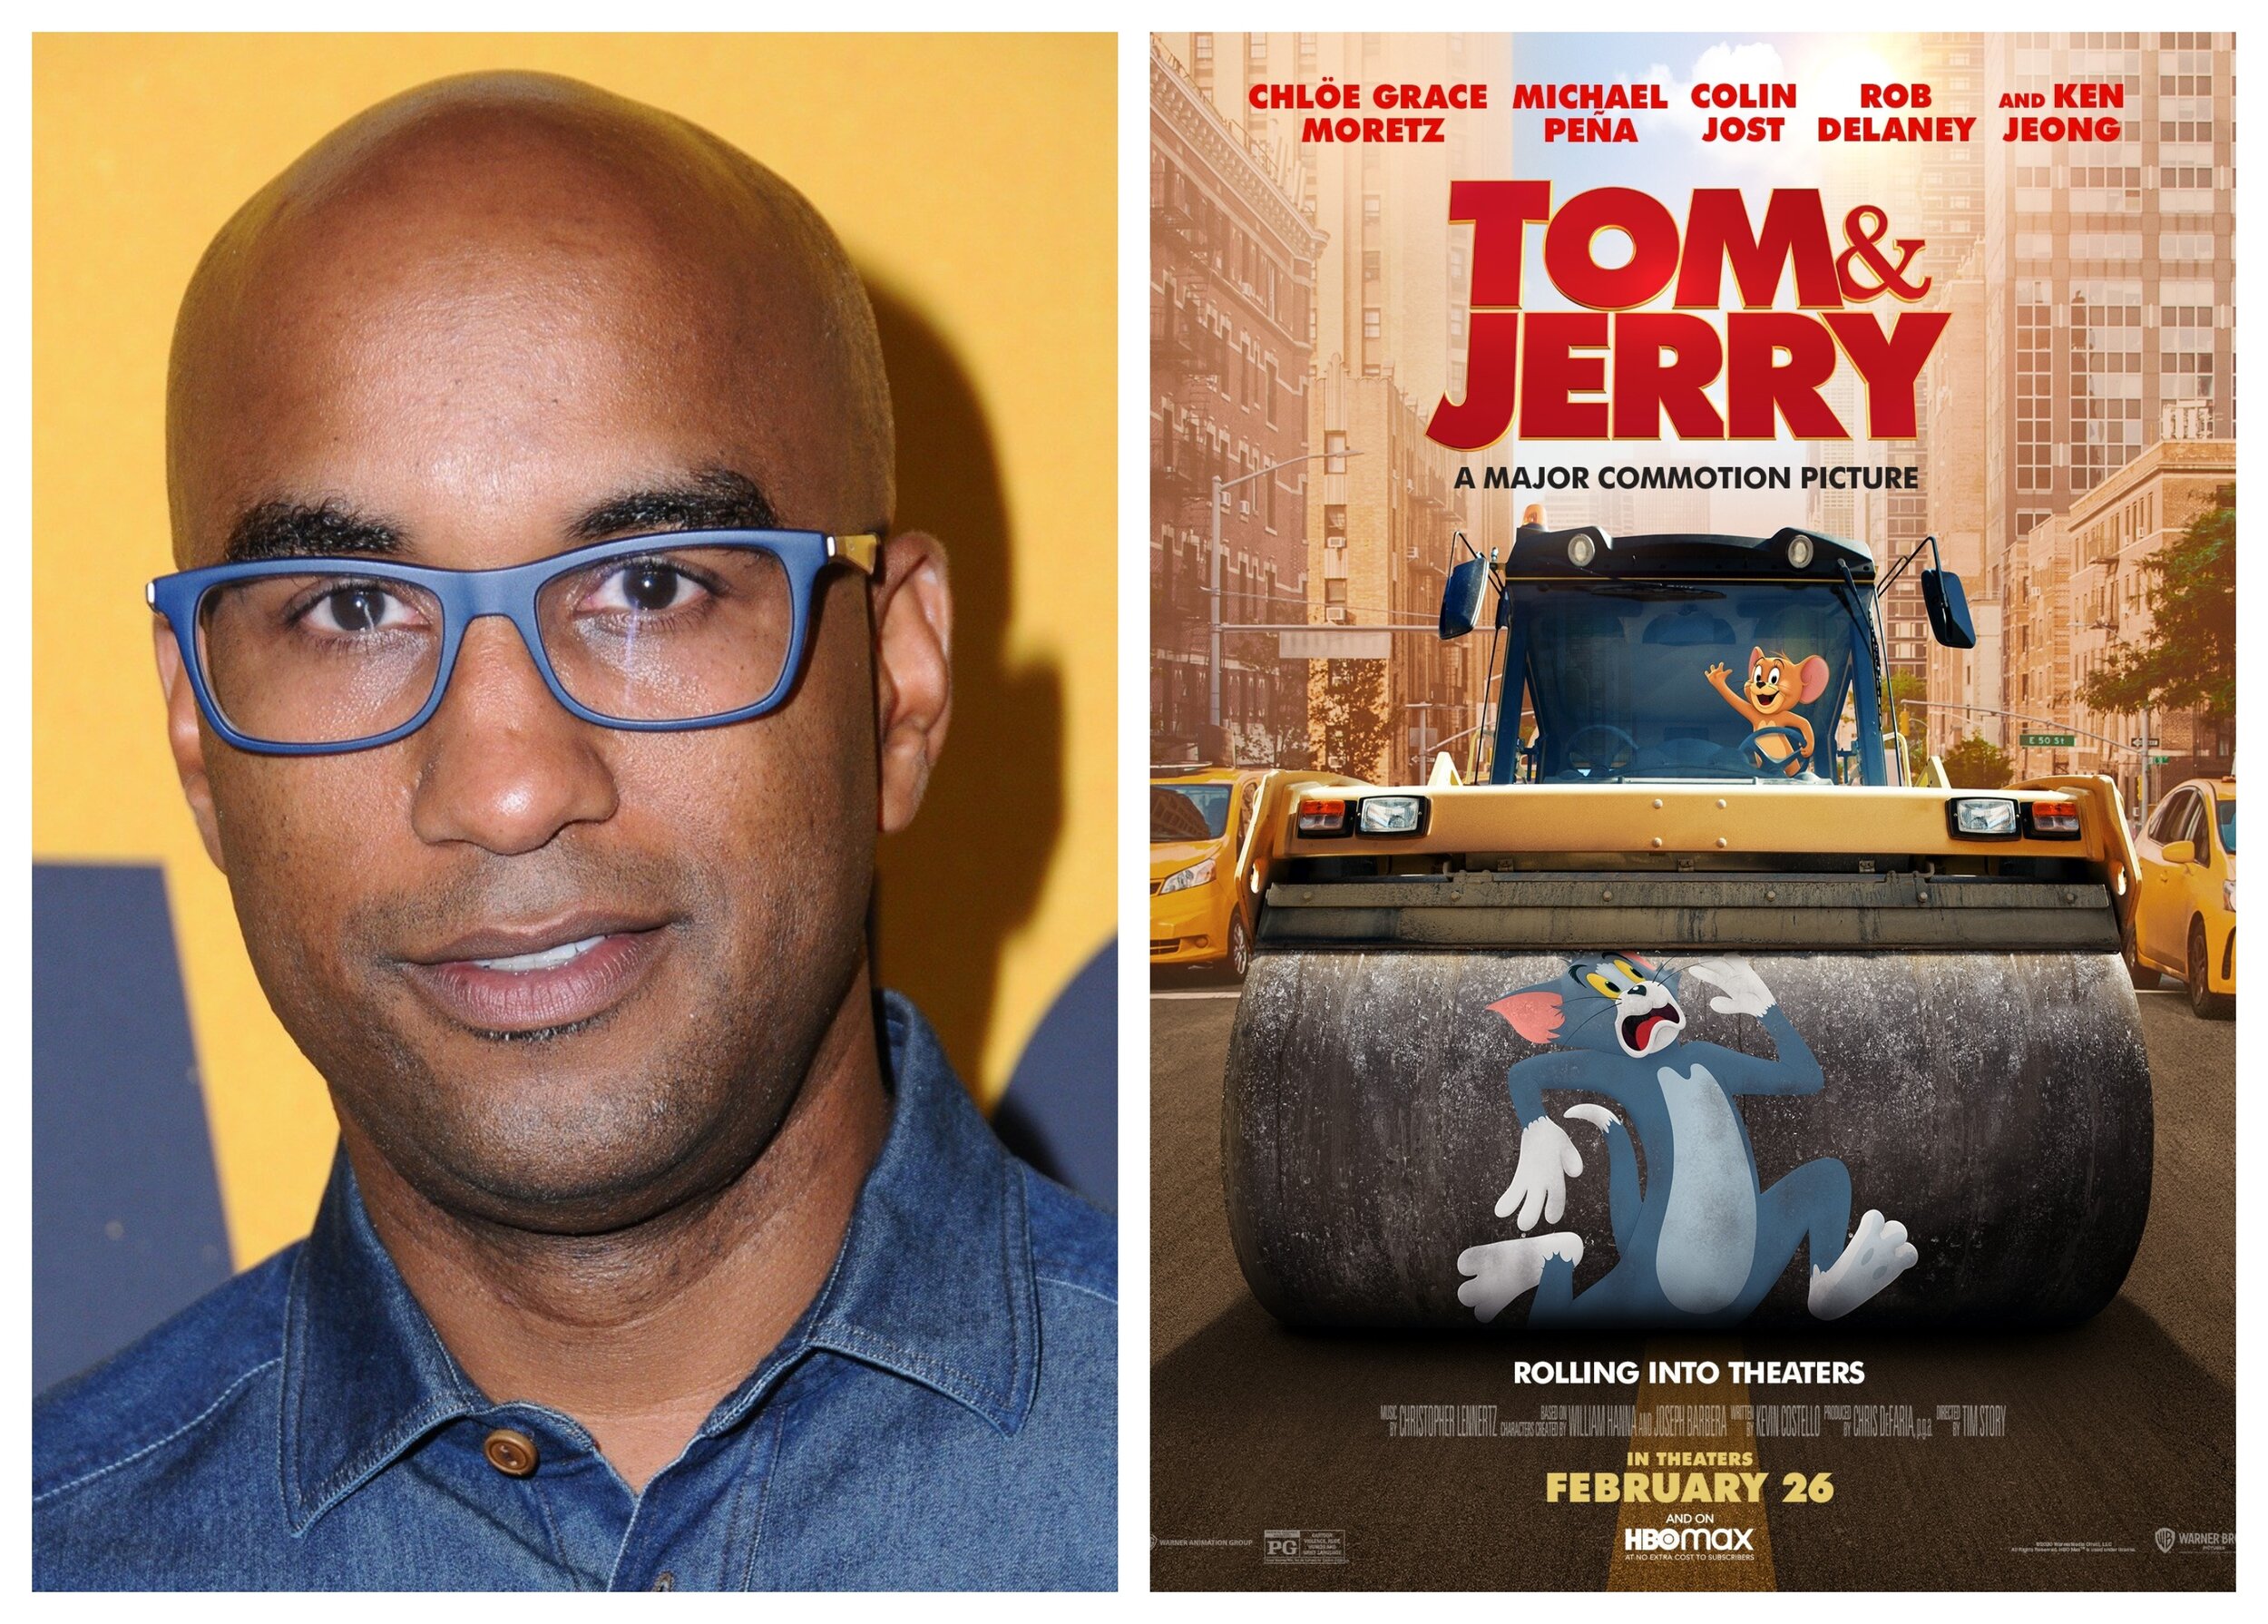 Chloe Grace Moretz Talks 'Tom & Jerry', Working With Michael Pena